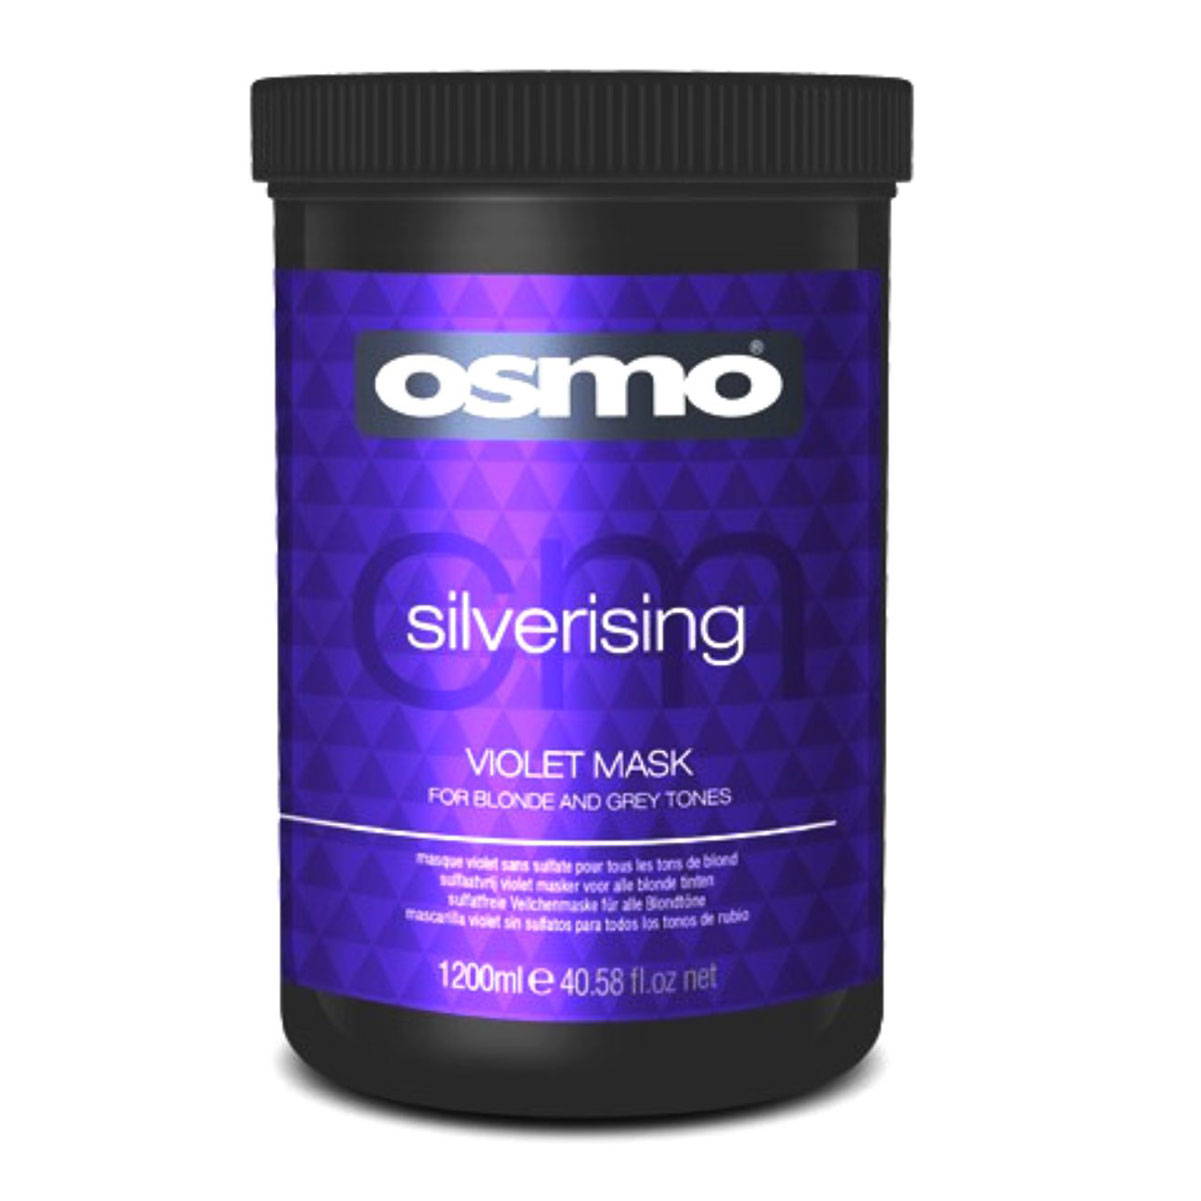 Osmo colour mission silverising violet mask 1200ml - 9064090 SHAMPOO